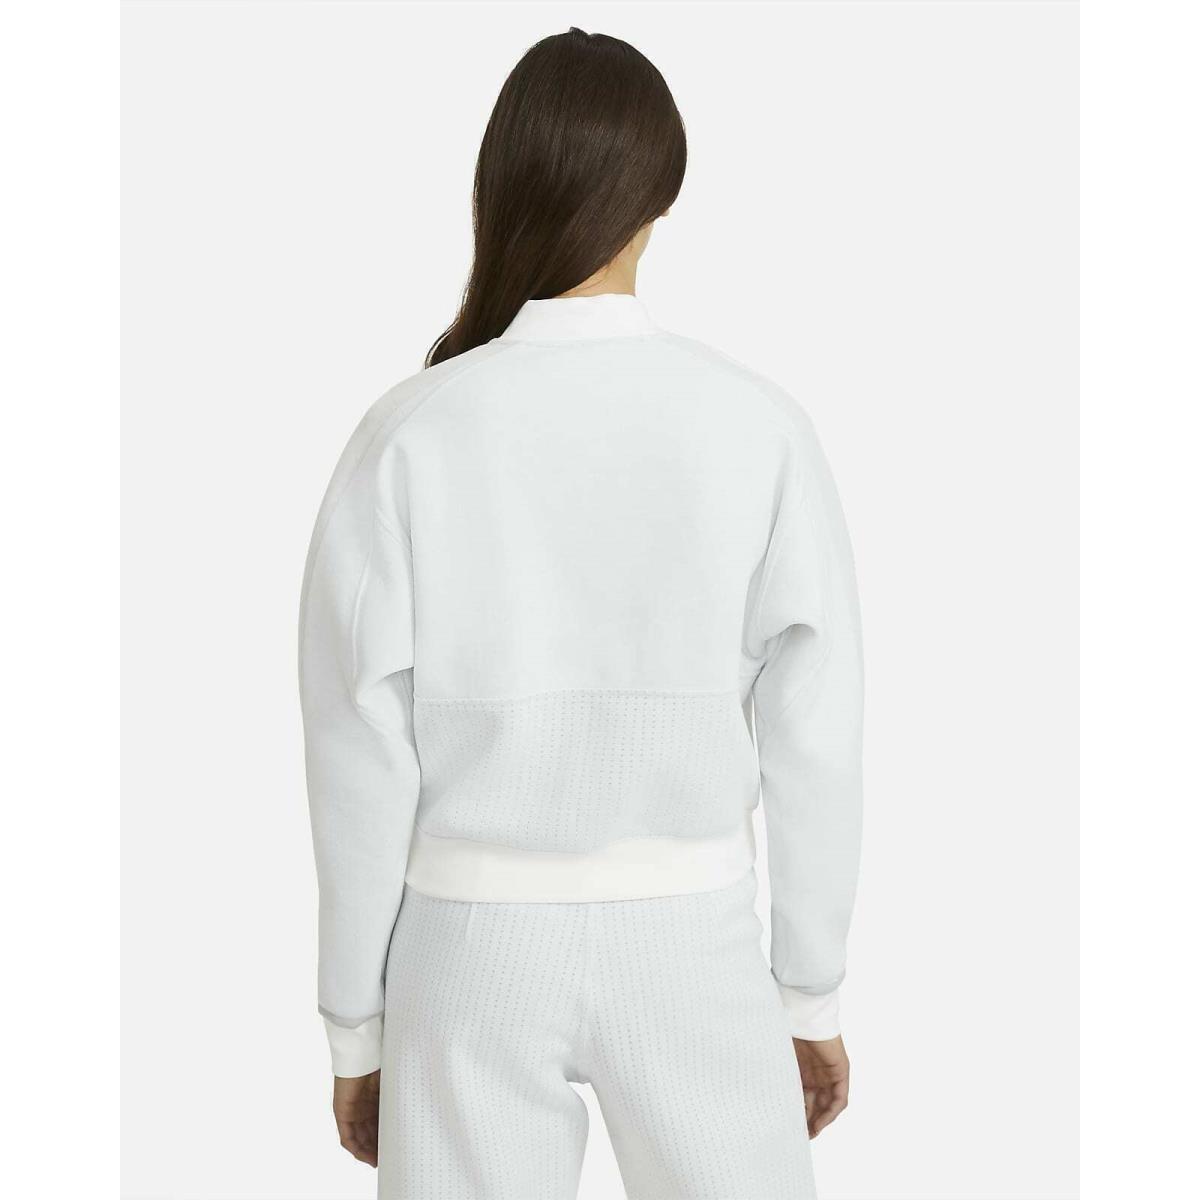 Nike clothing NSW Tech Fleece - White 2